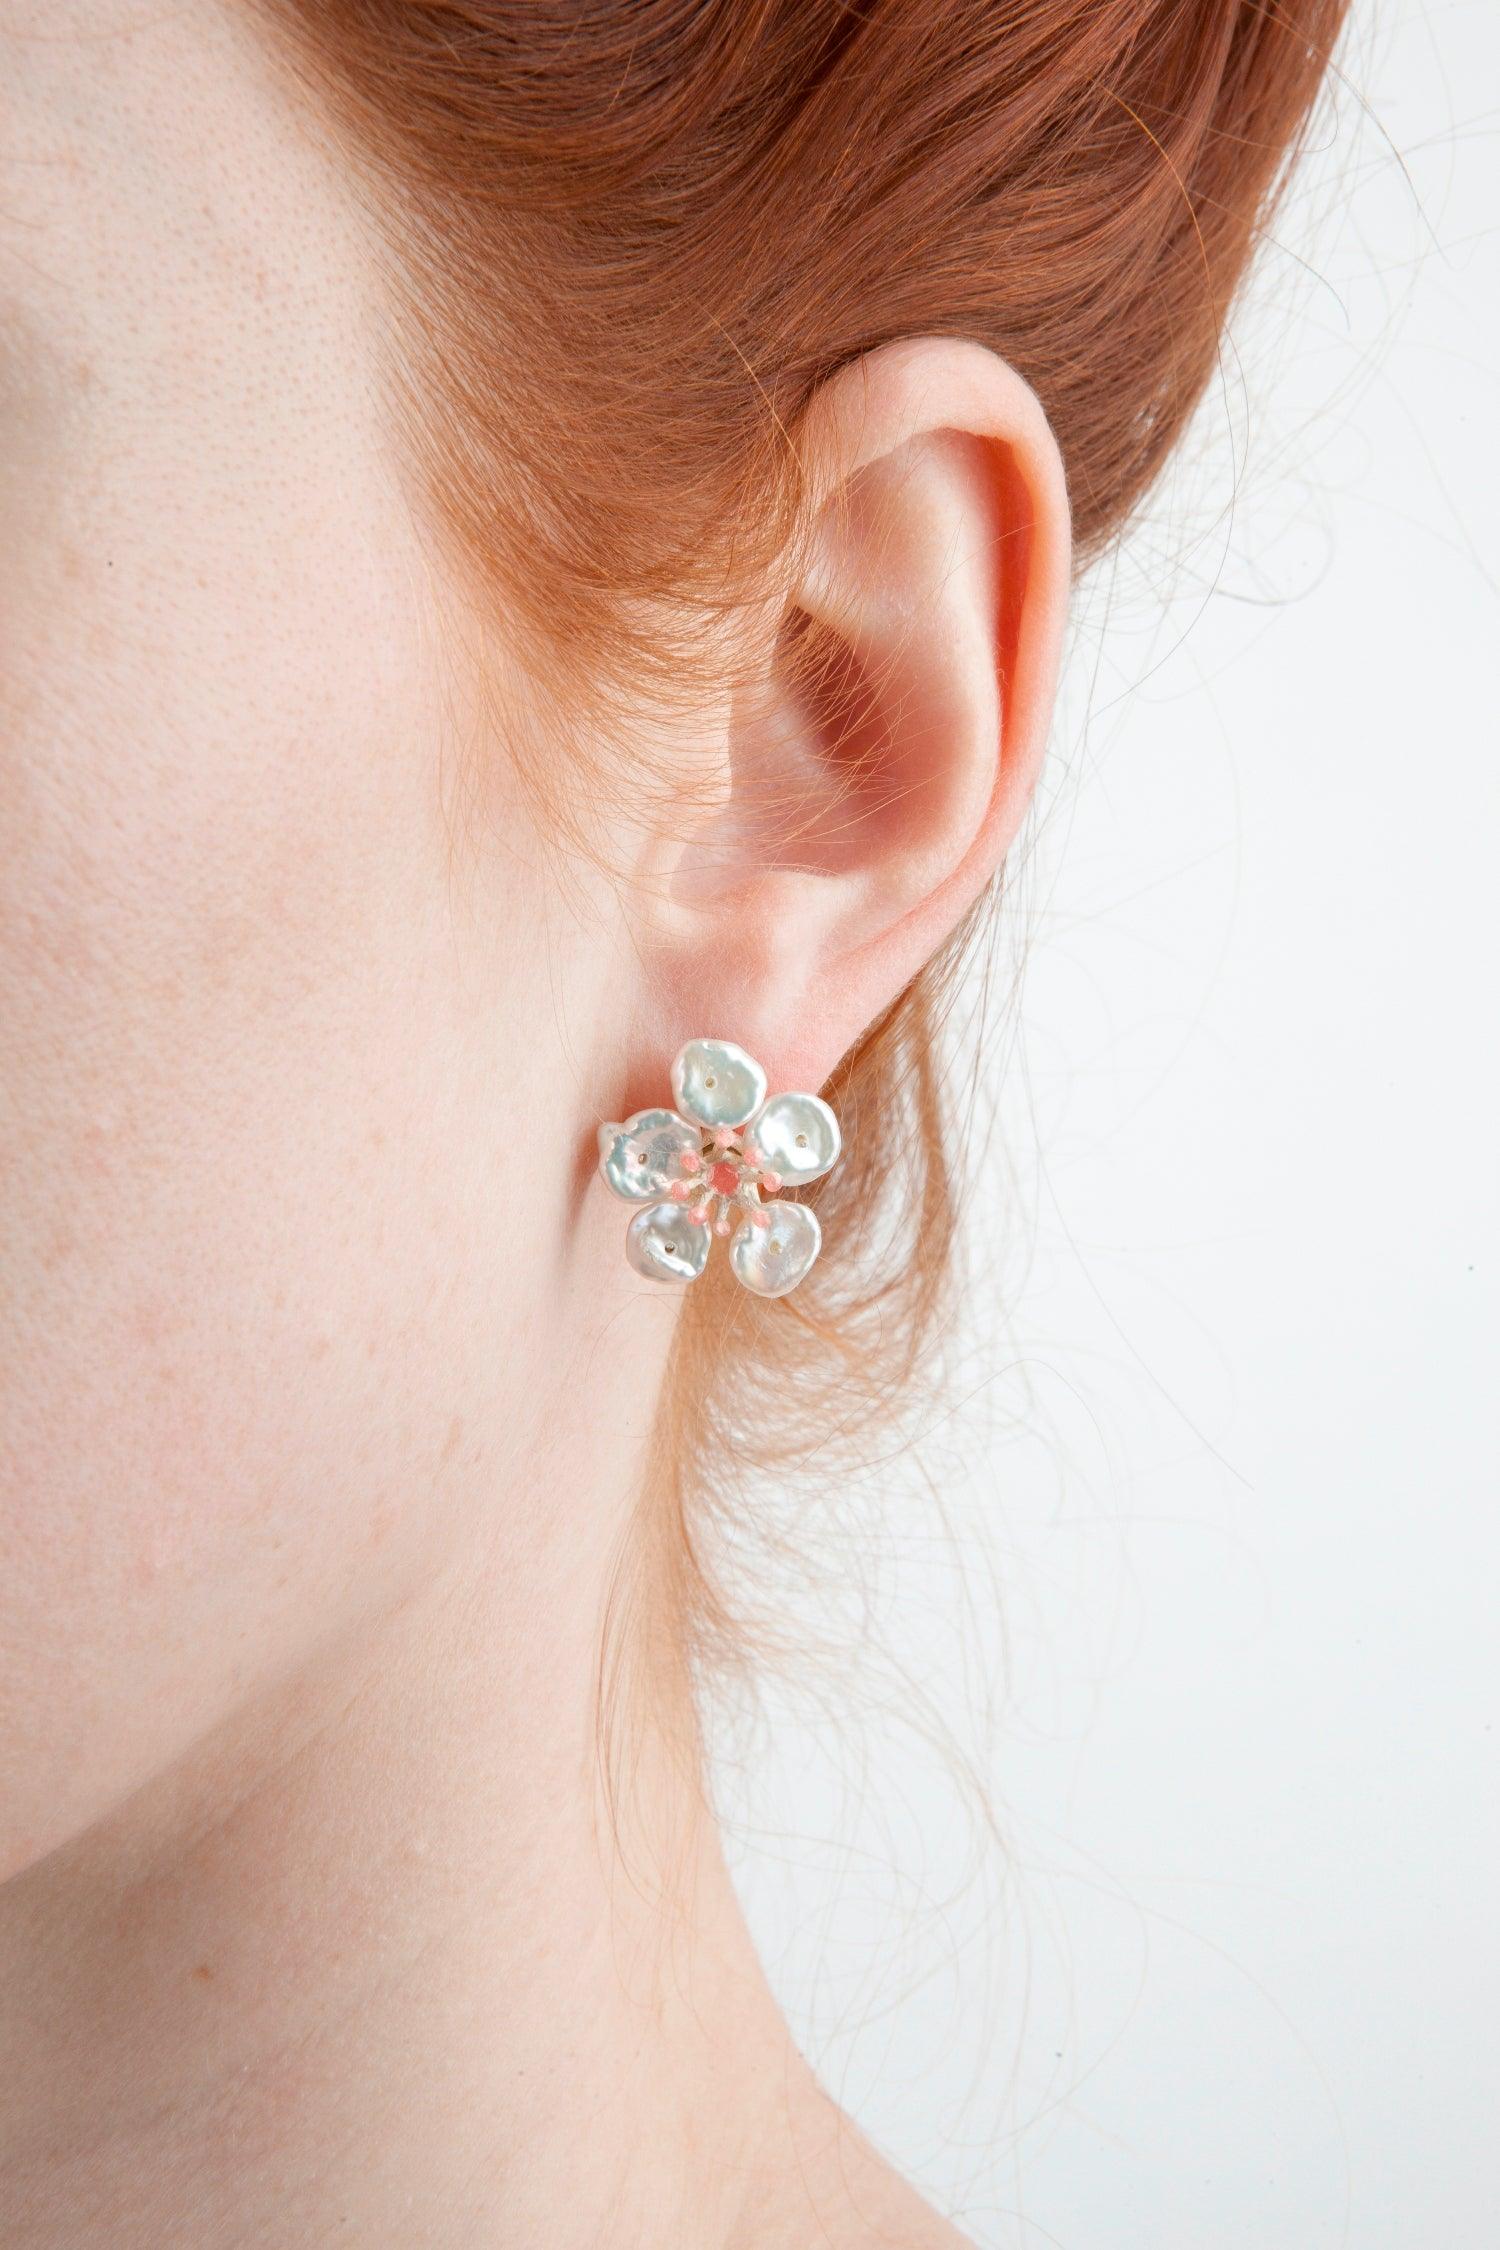 Cherry Blossom Earrings - Flower Post - Michael Michaud Jewellery